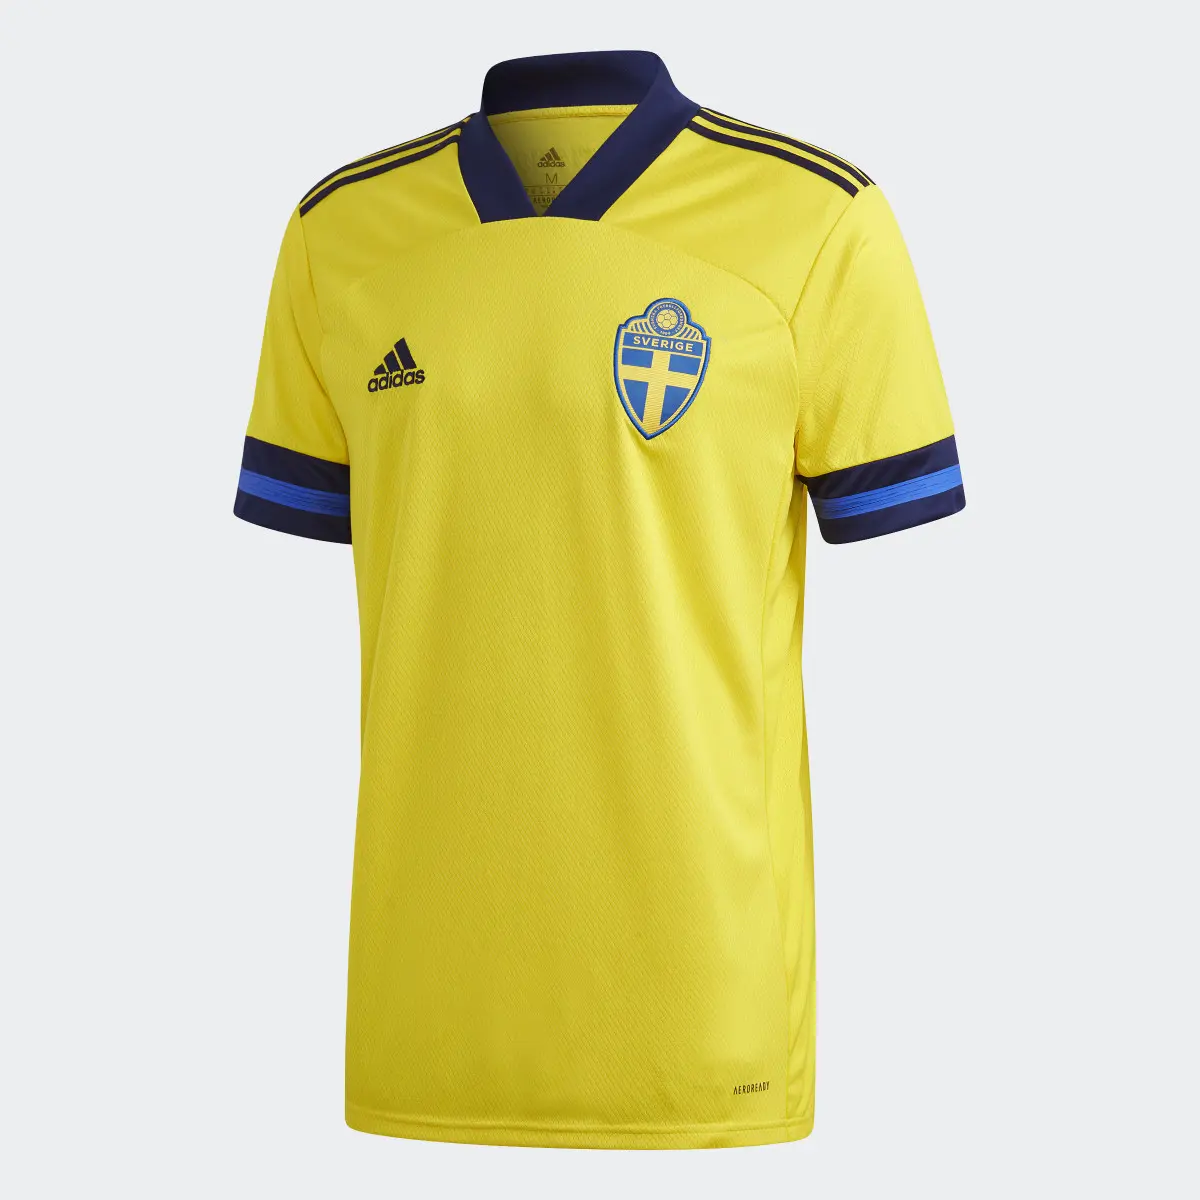 Adidas Sweden Home Jersey. 1